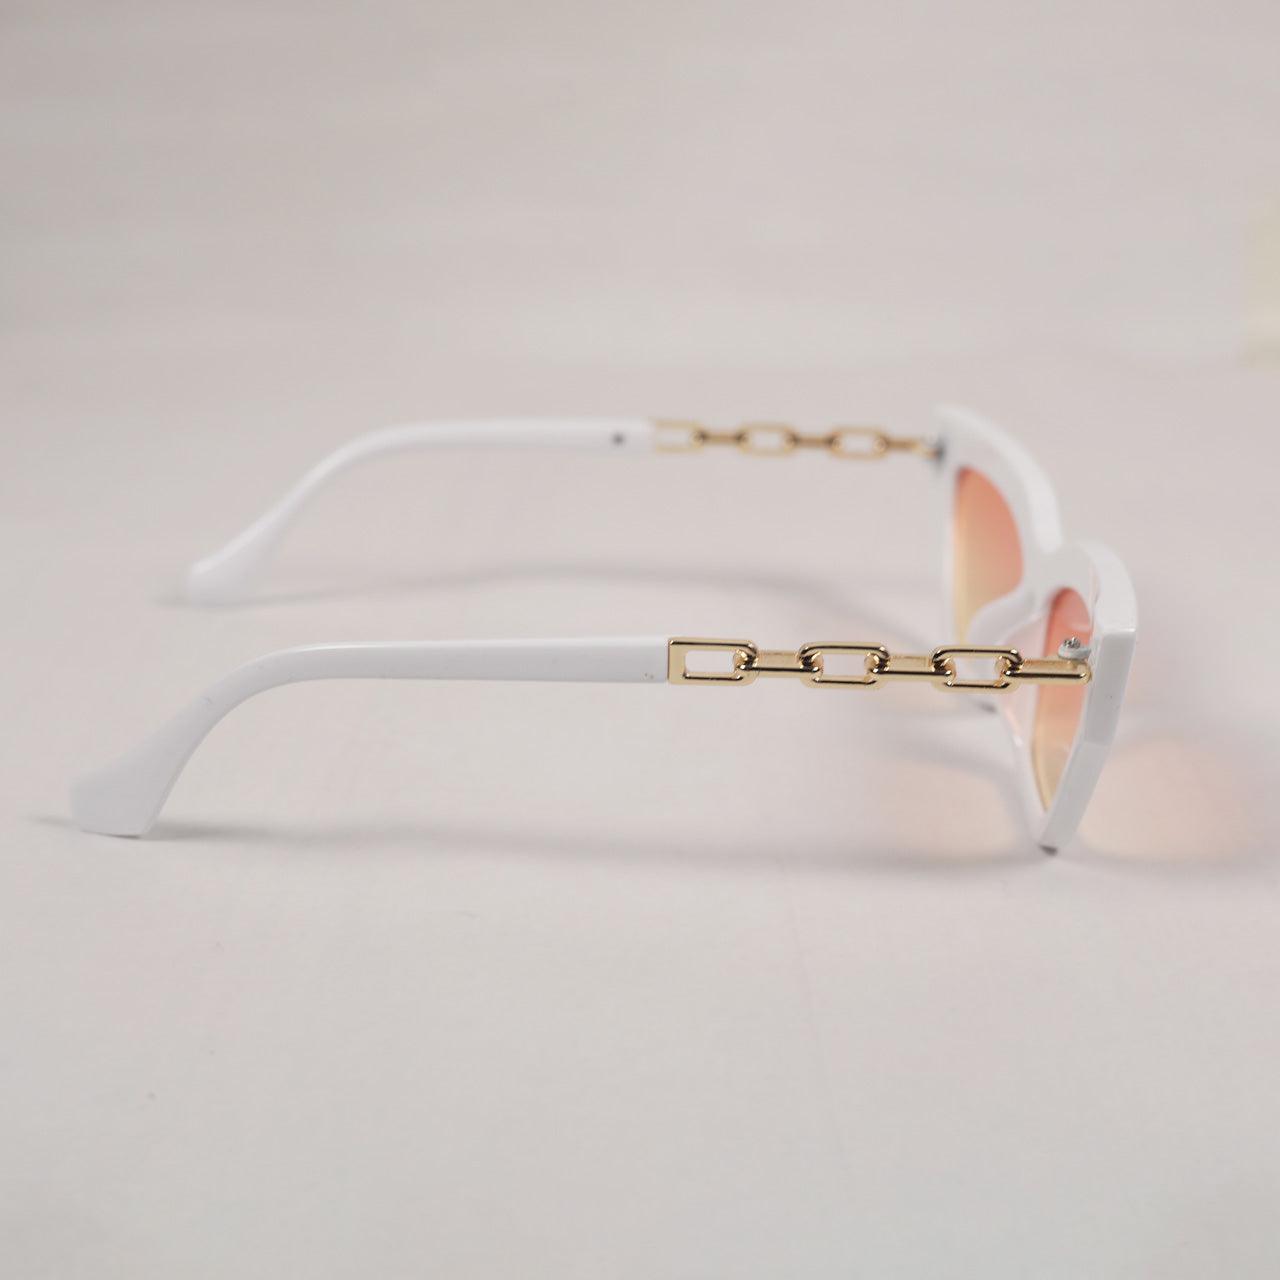 White Chain Cateye Sunglasses